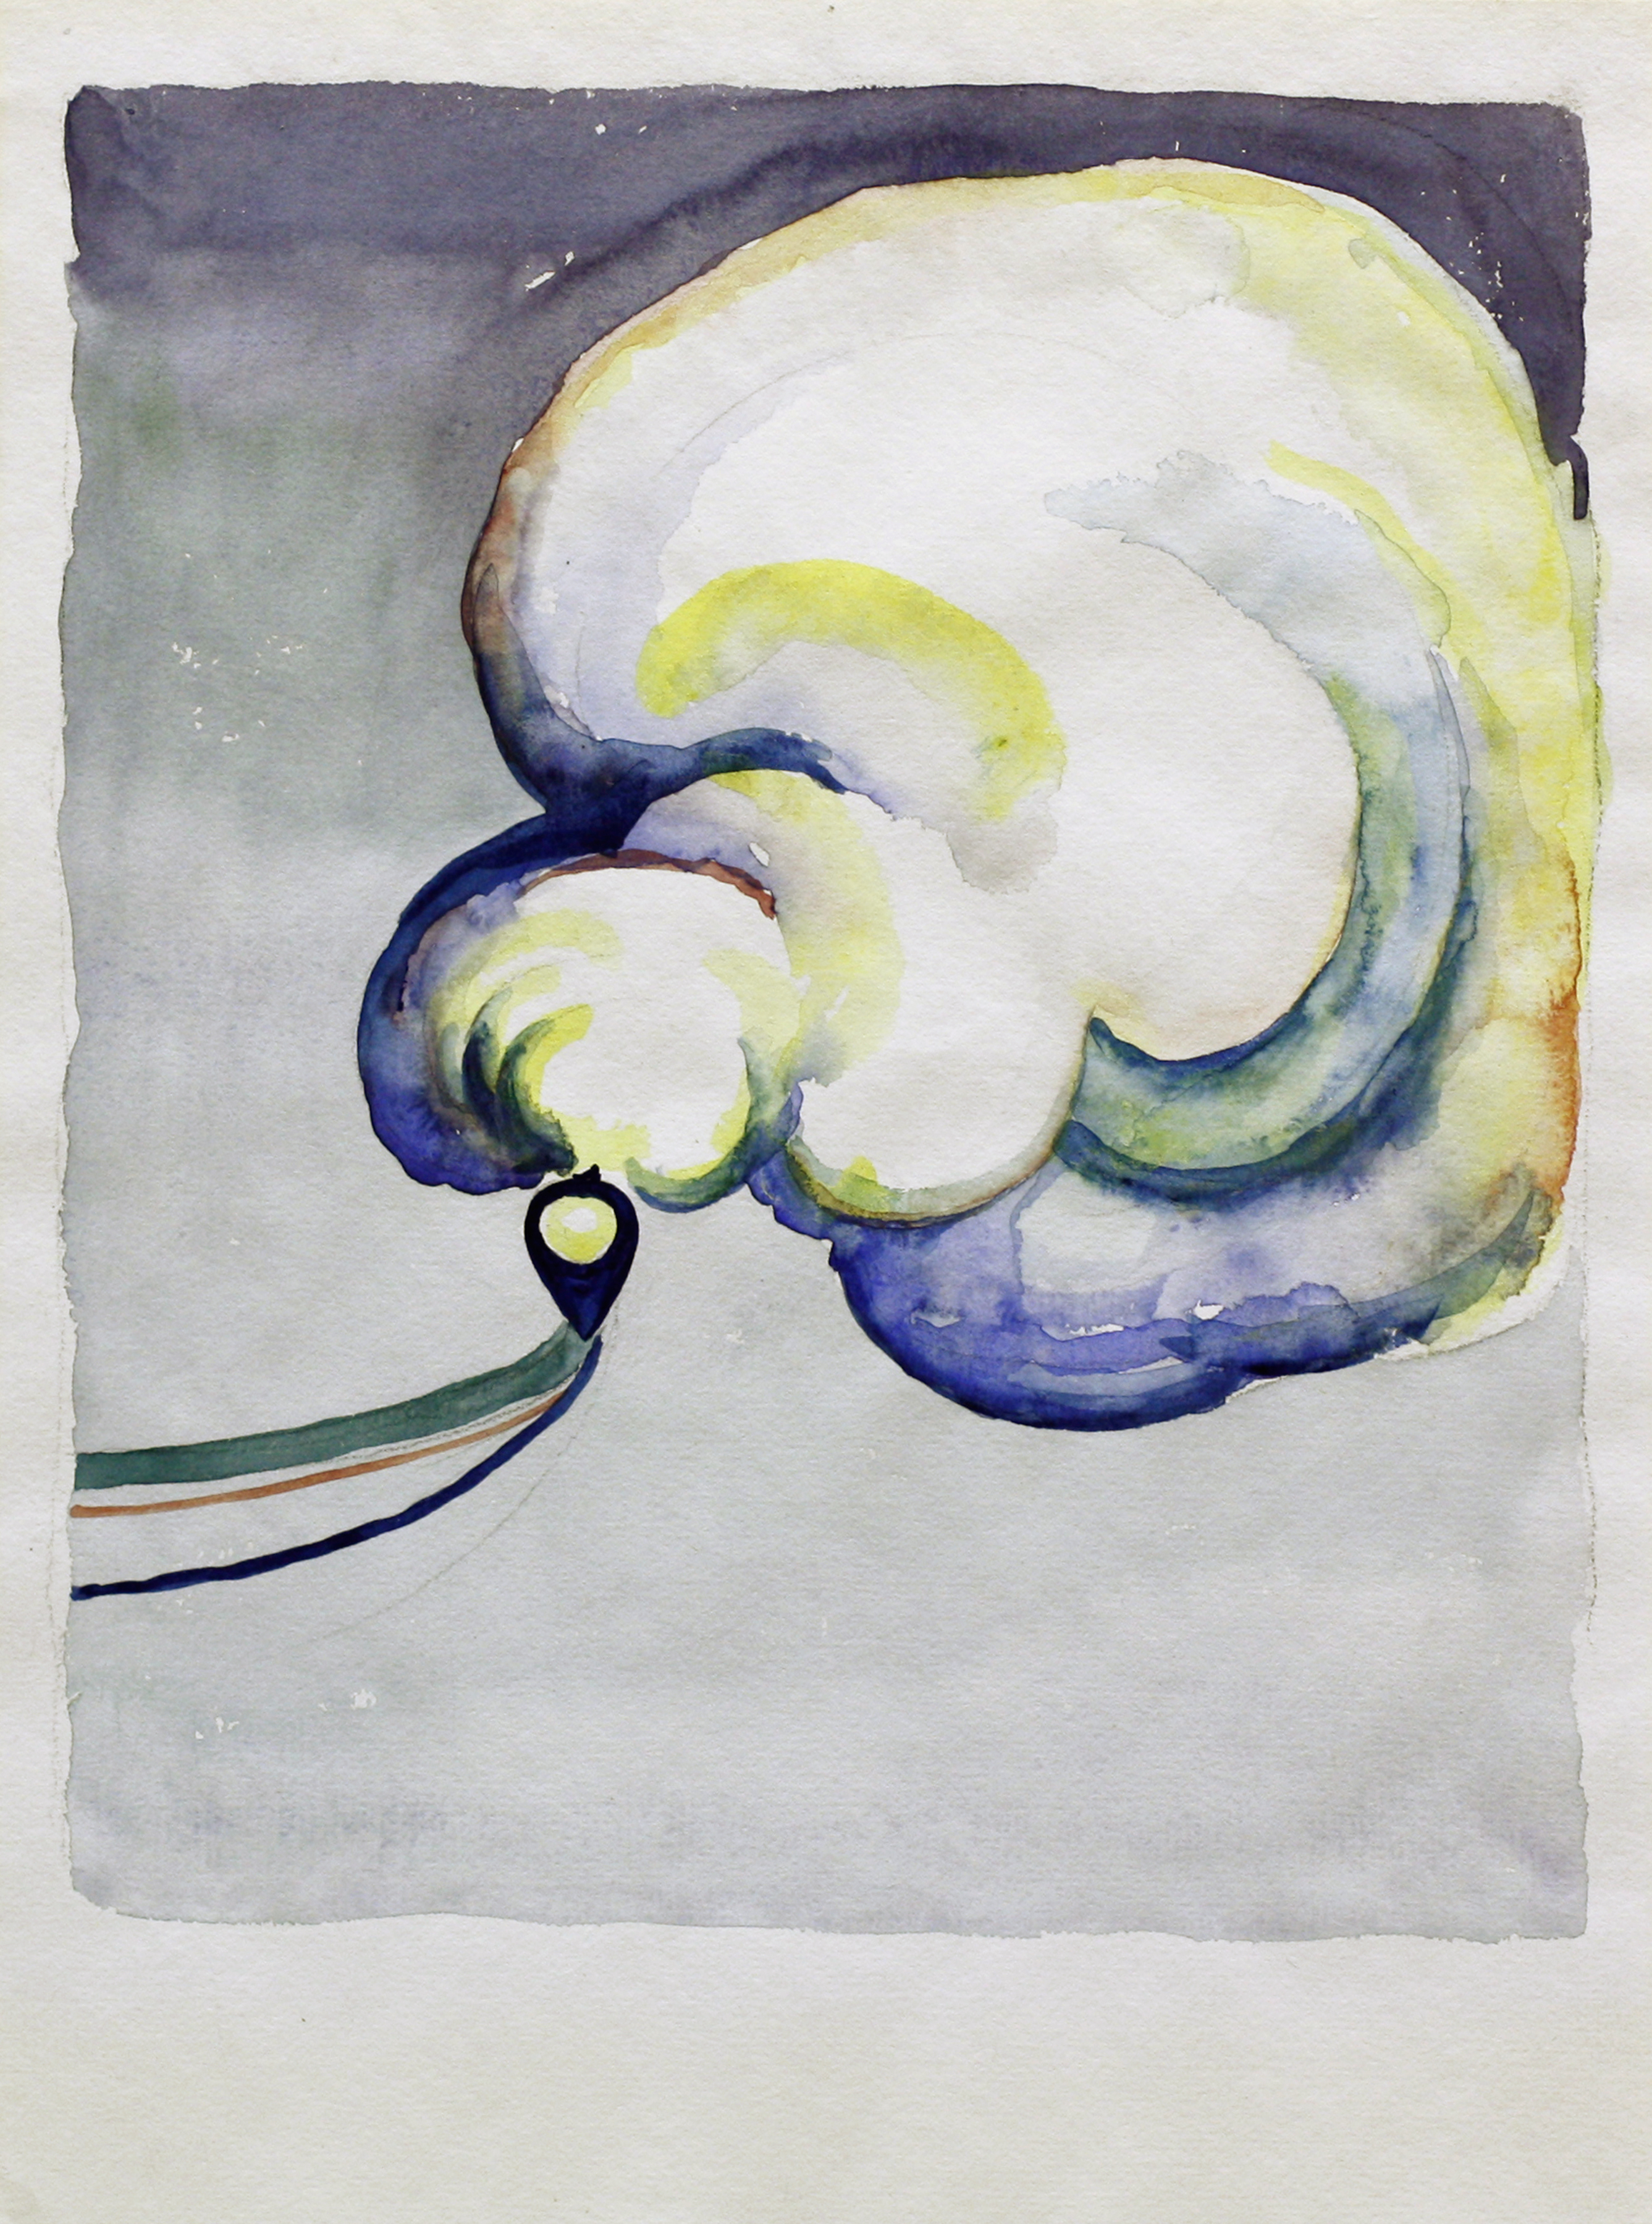 Georgia O’Keeffe’s Texas watercolors: “astonishing” and “touching”